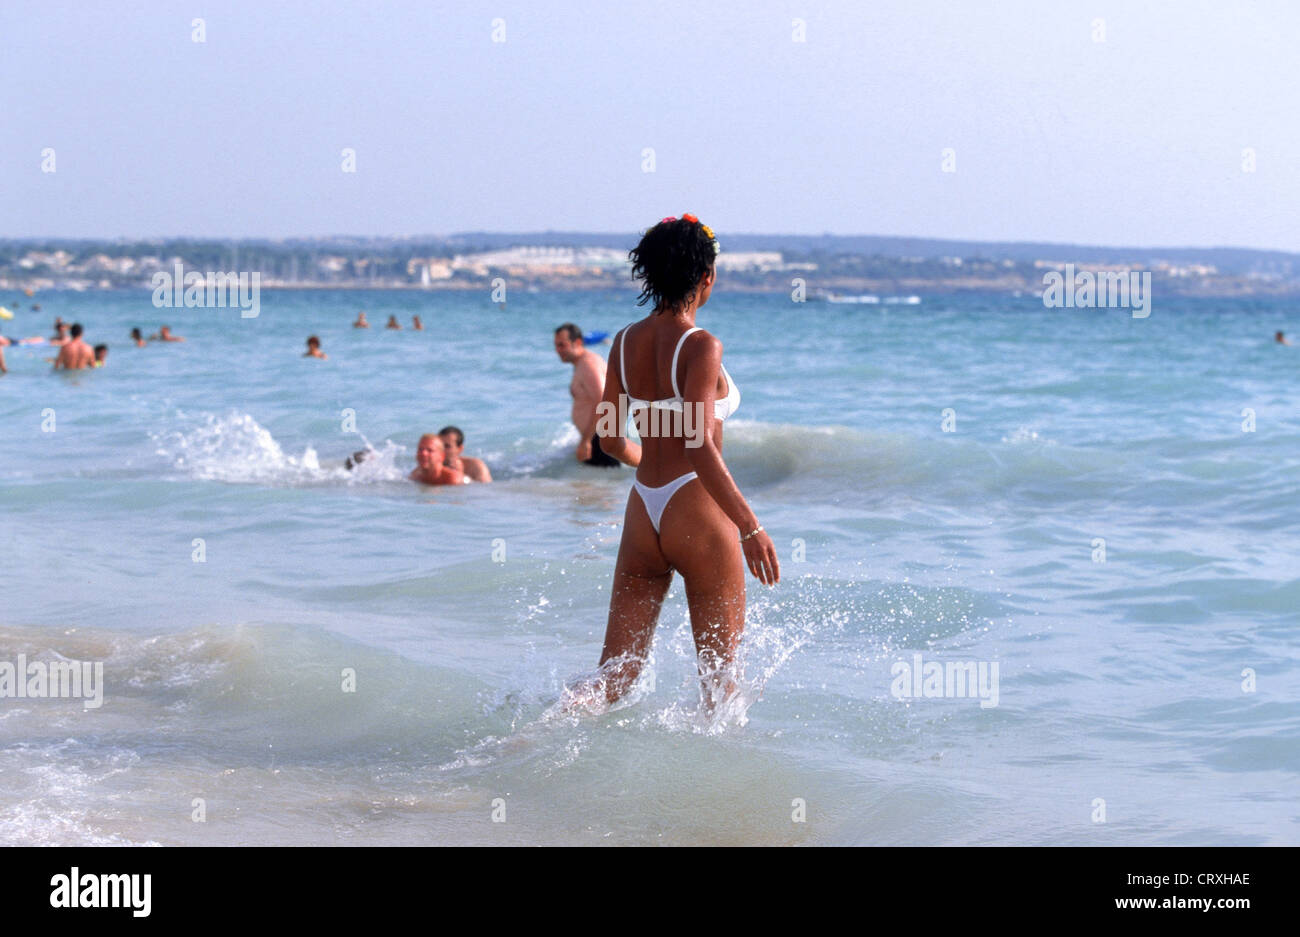 Spain, Mallorca, Dutche vacationer standing in water Stock Photo